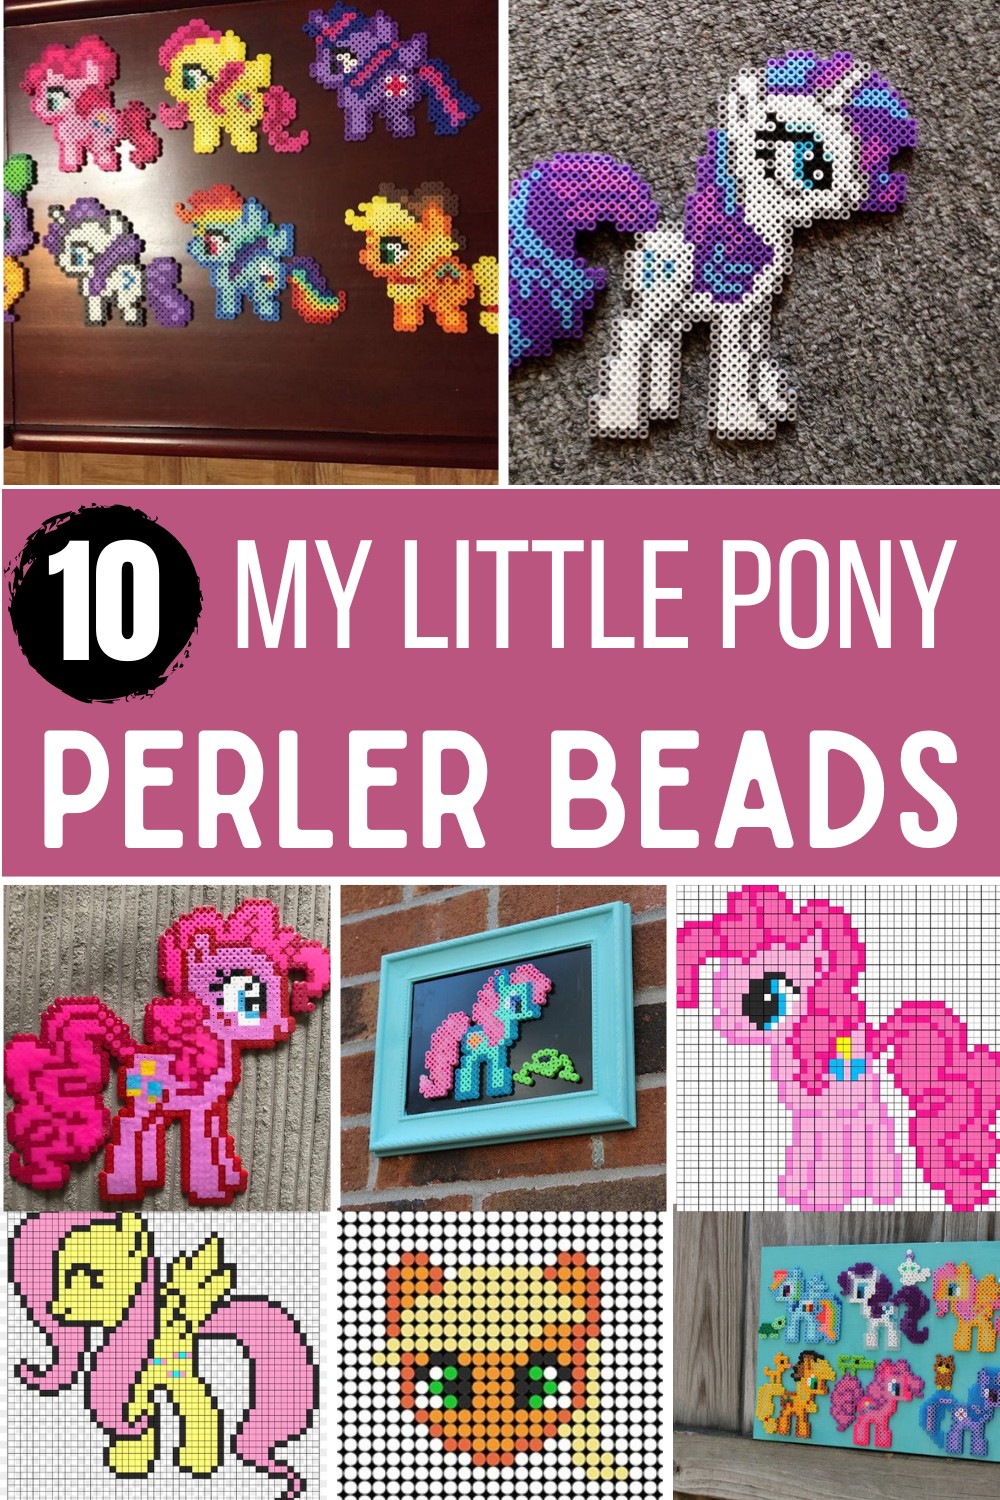 My Little Pony Perler Bead Patterns